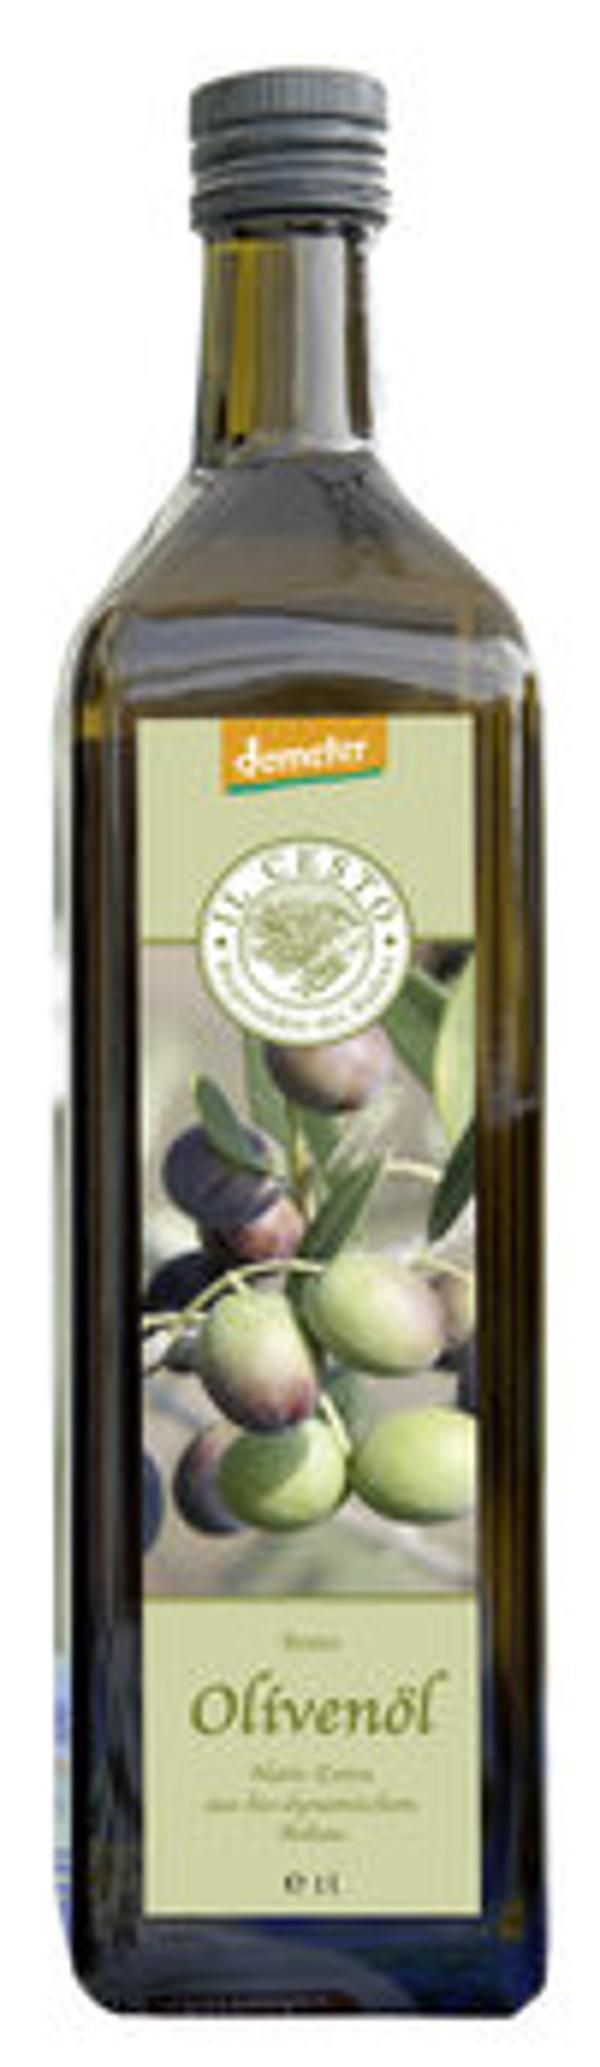 Produktfoto zu Olivenöl nativ extra 1l